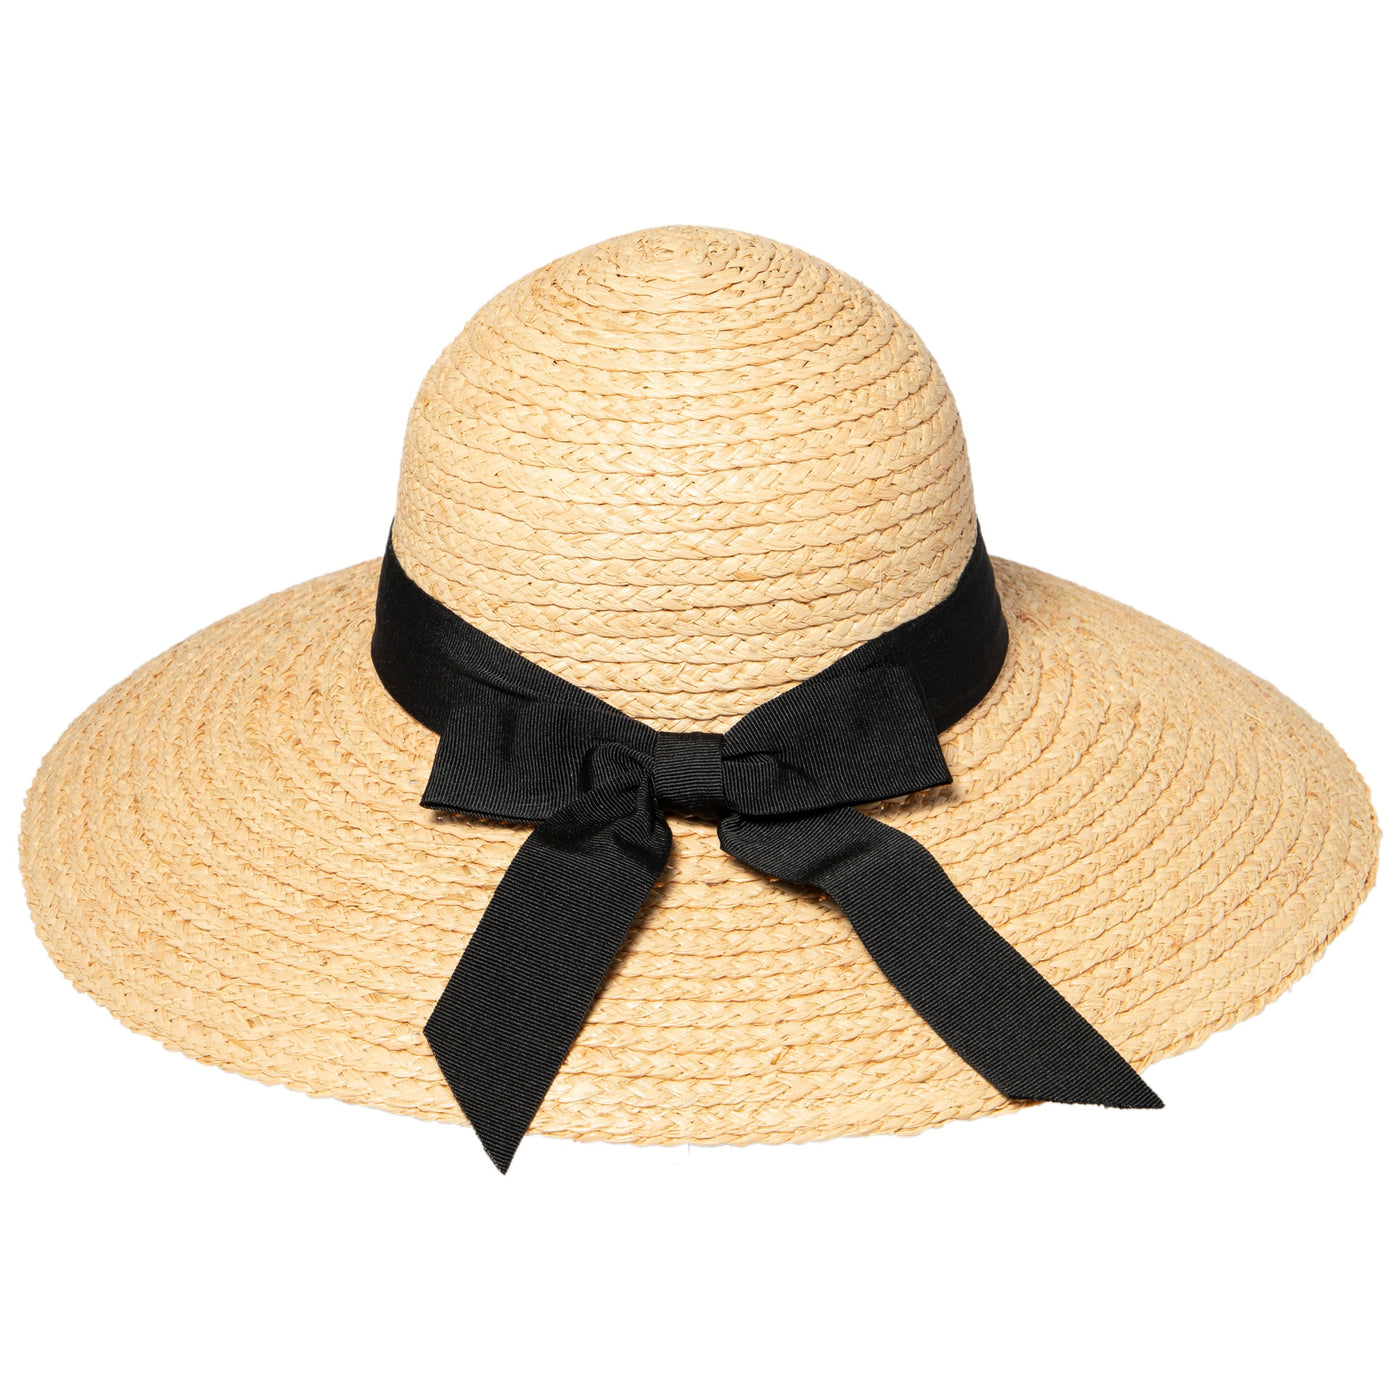 SUN BRIM - Women's Large Brim Raffia Hat With A Black Ribbon